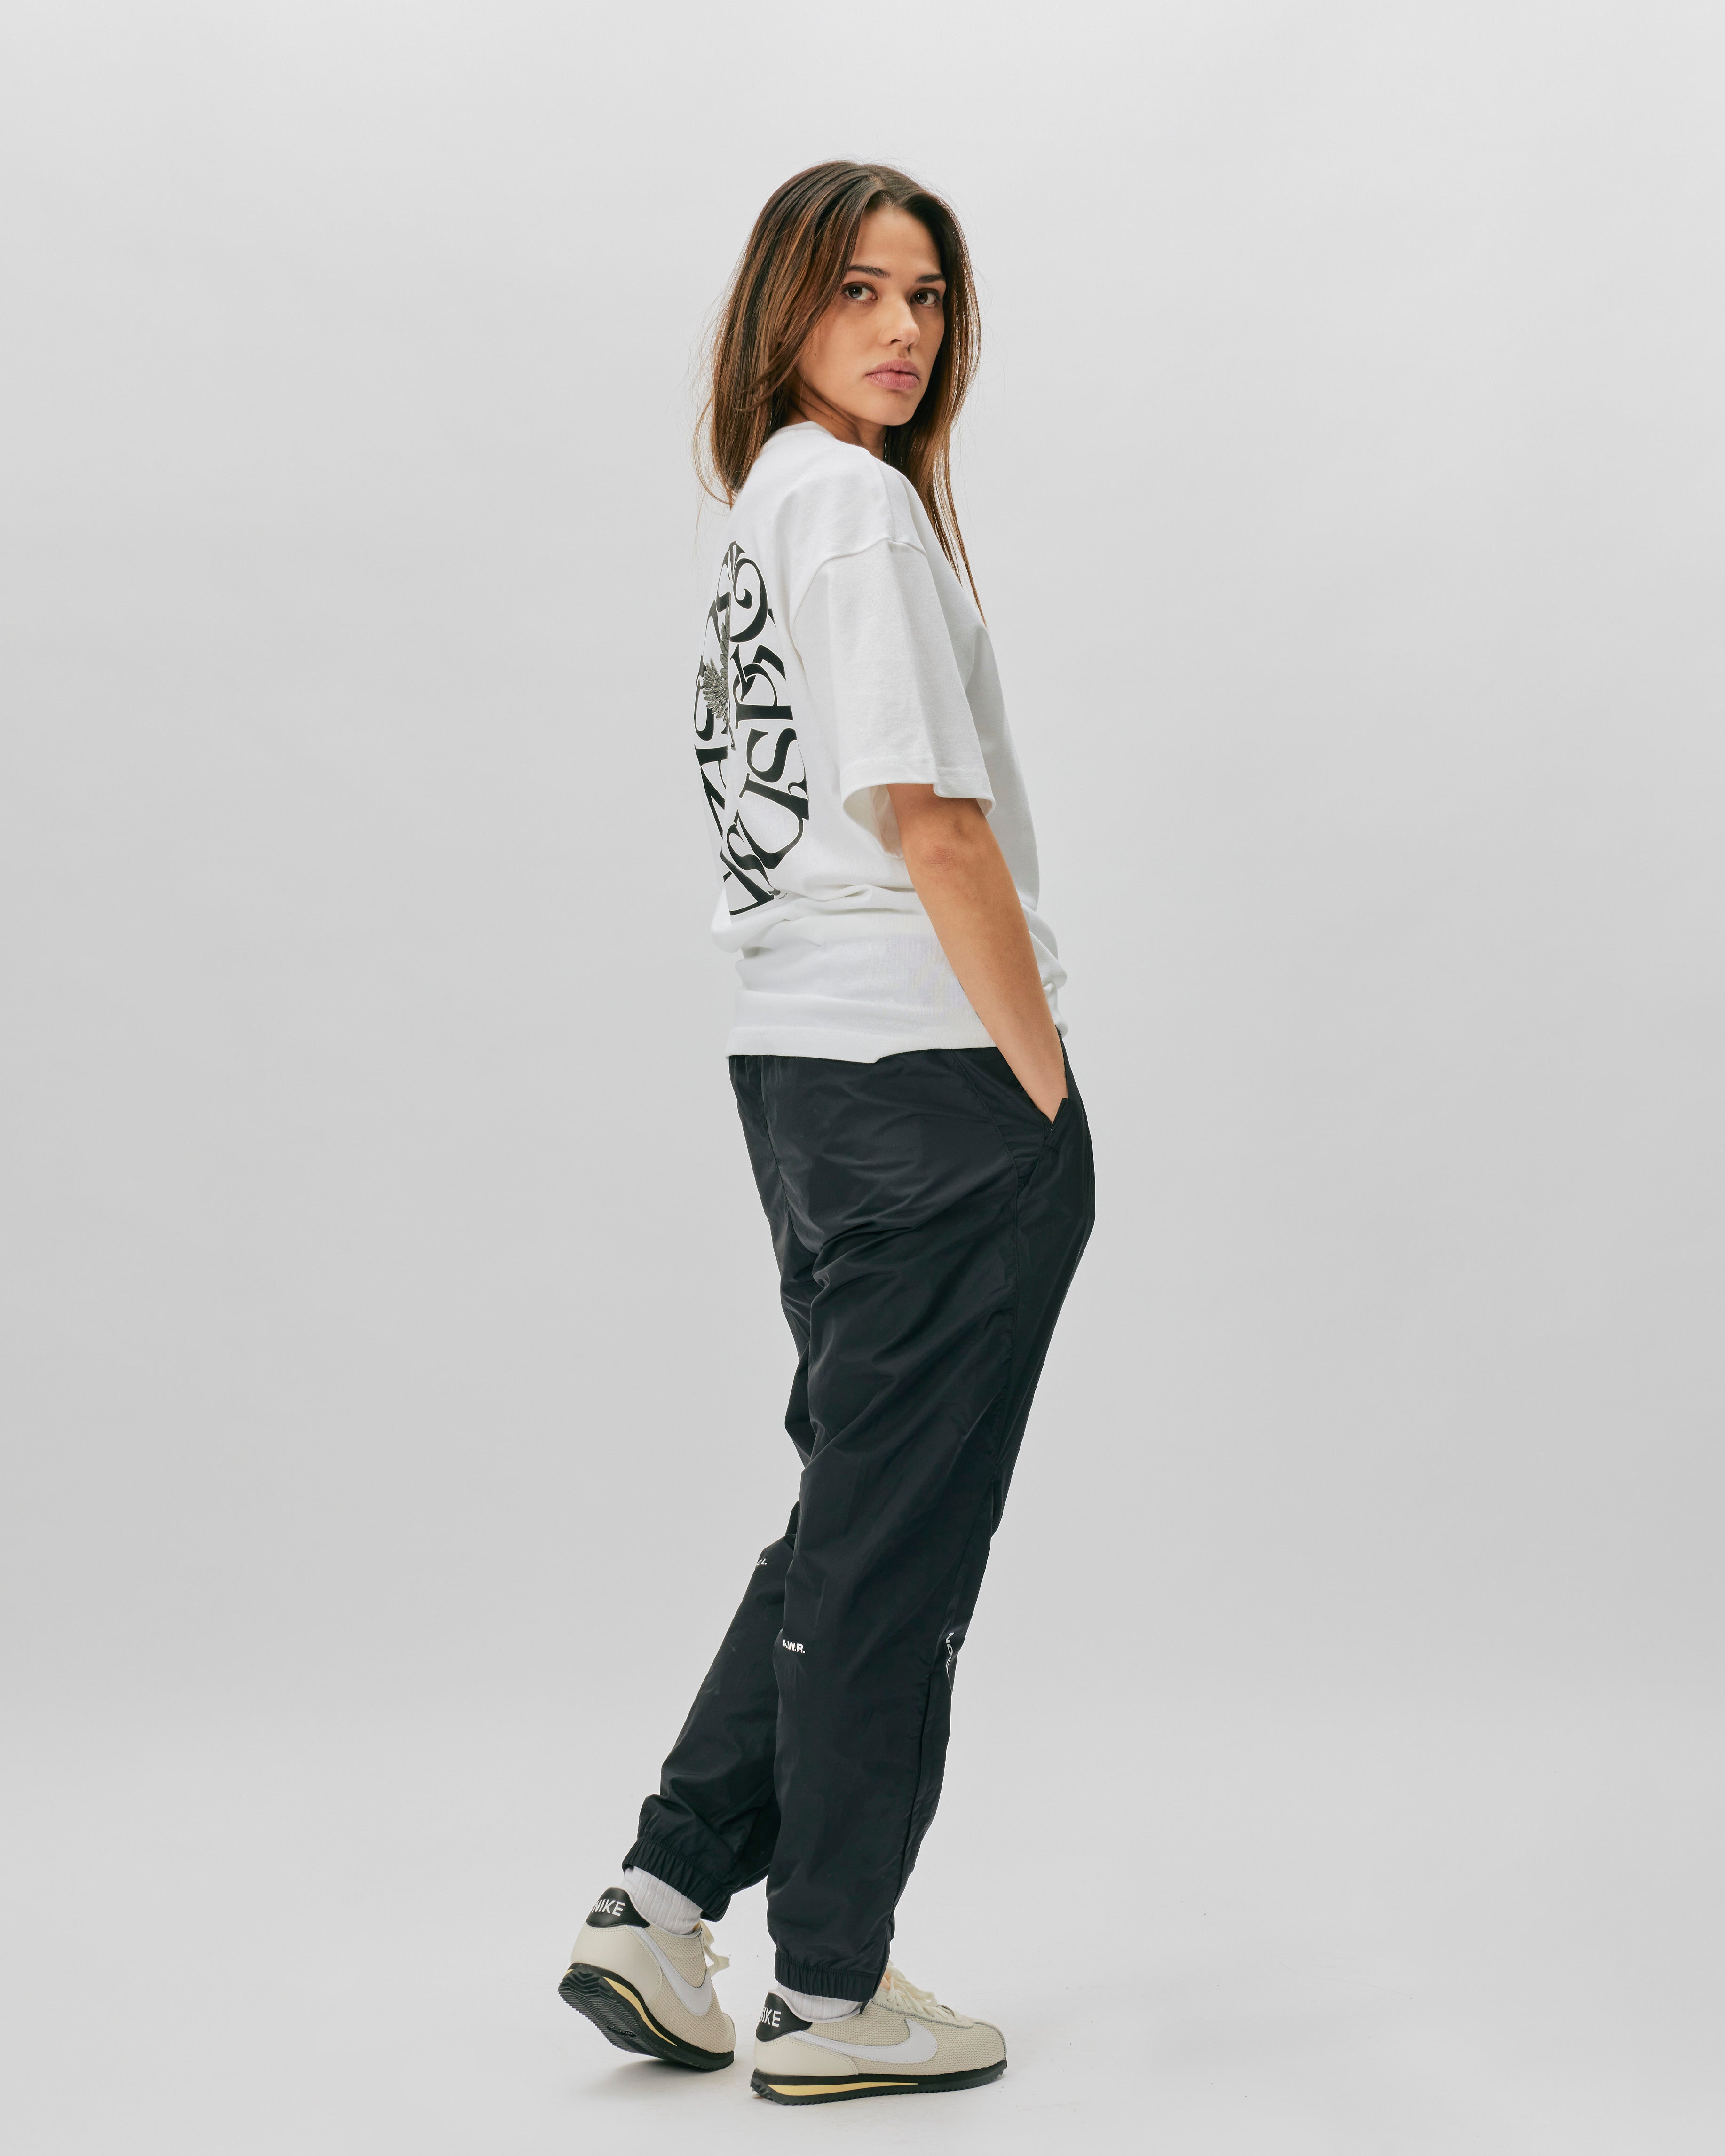 Nike PEG2K T-shirt WHITE/BLACK FZ7620-100